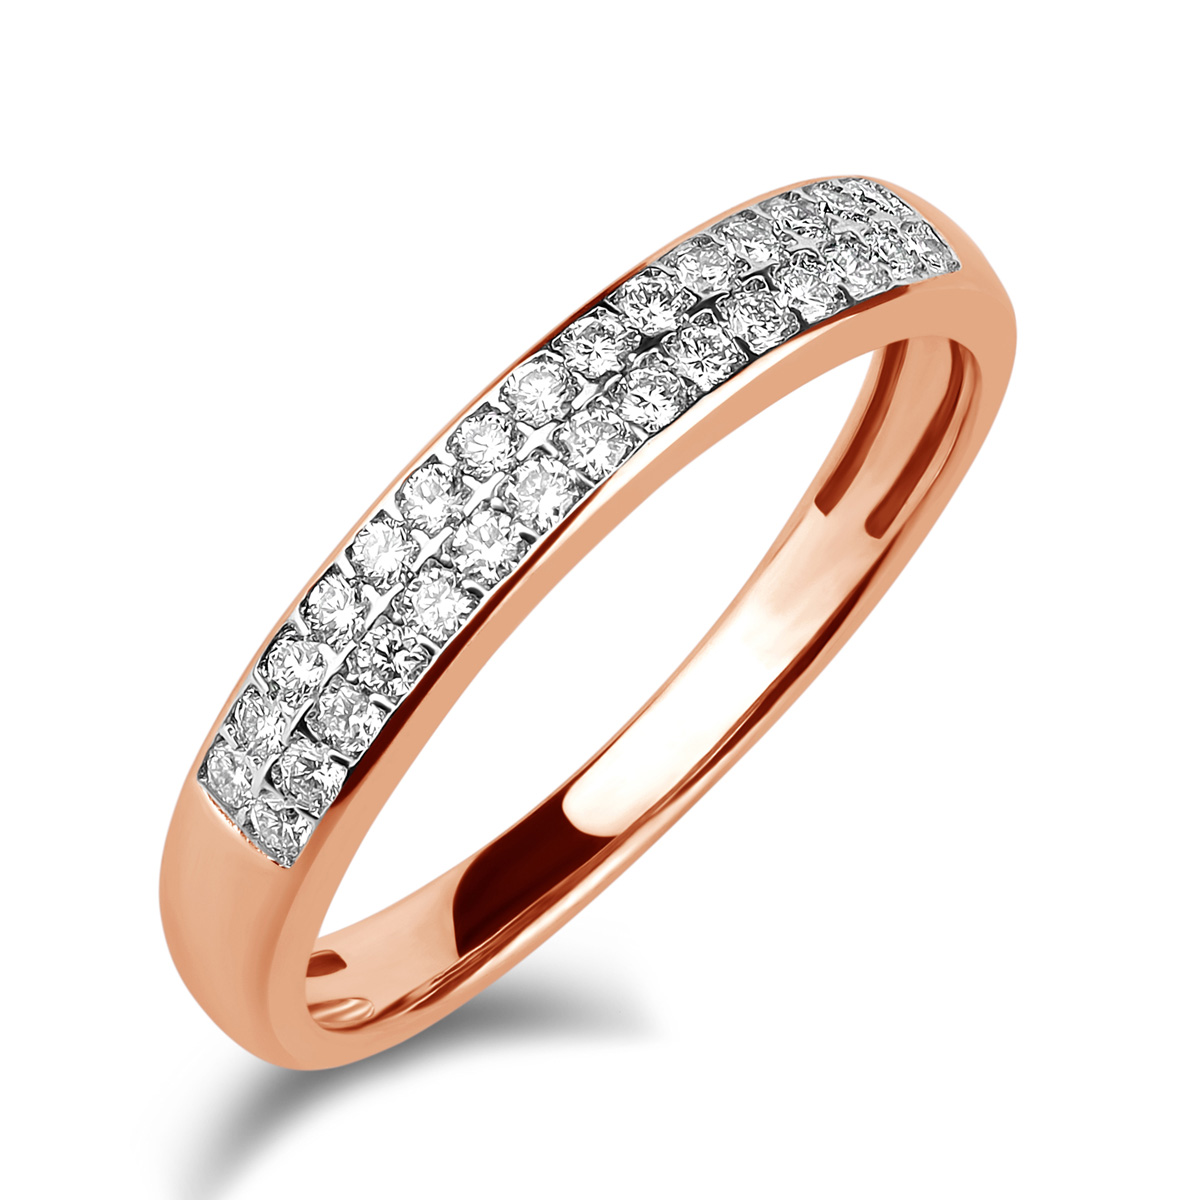 HE52466RWD4RP
14K rose gold diamond ring